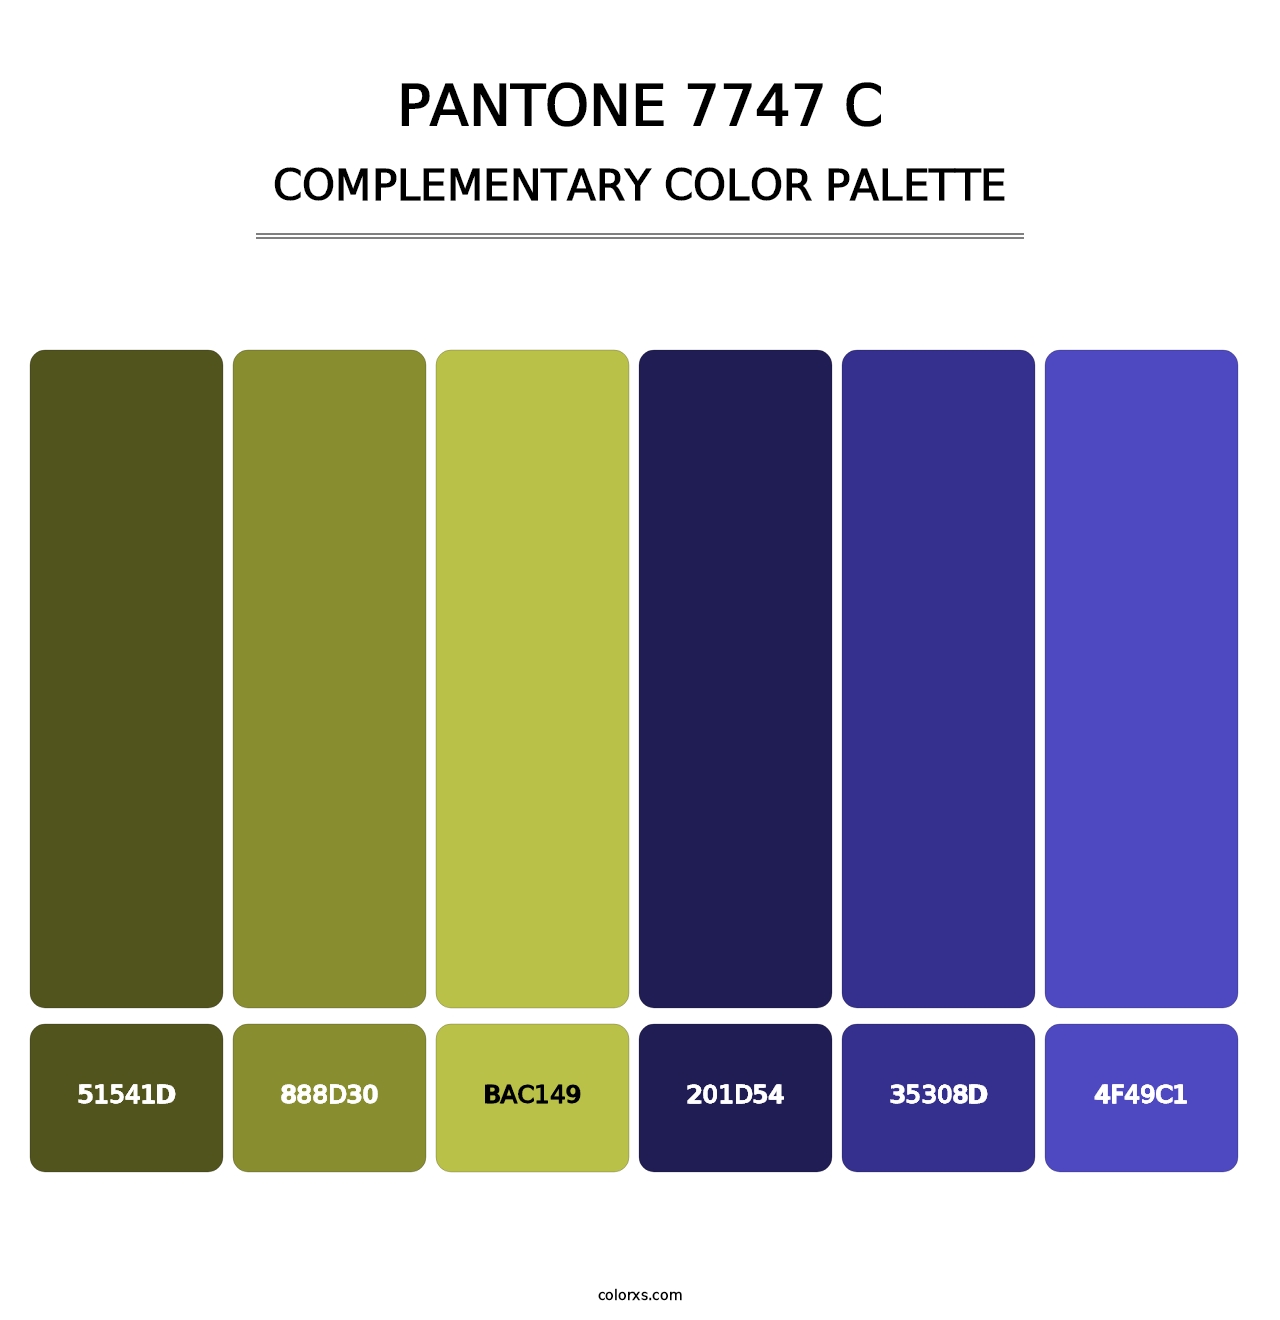 PANTONE 7747 C - Complementary Color Palette